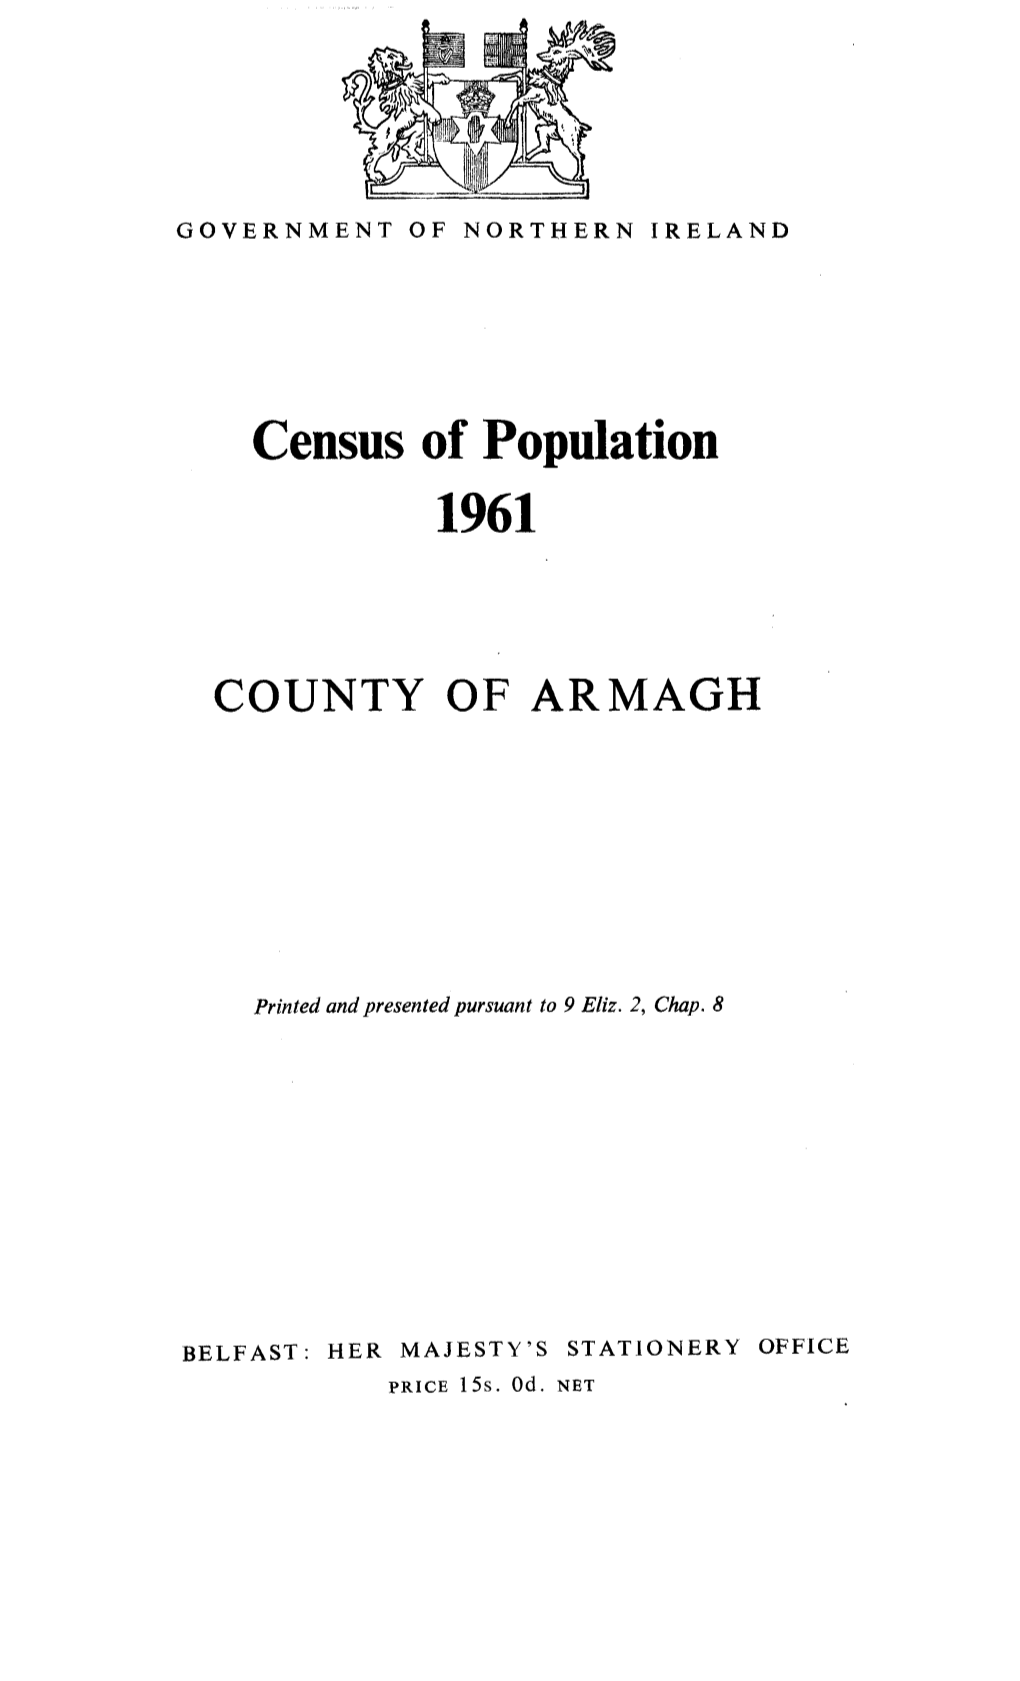 Census of Population 1961